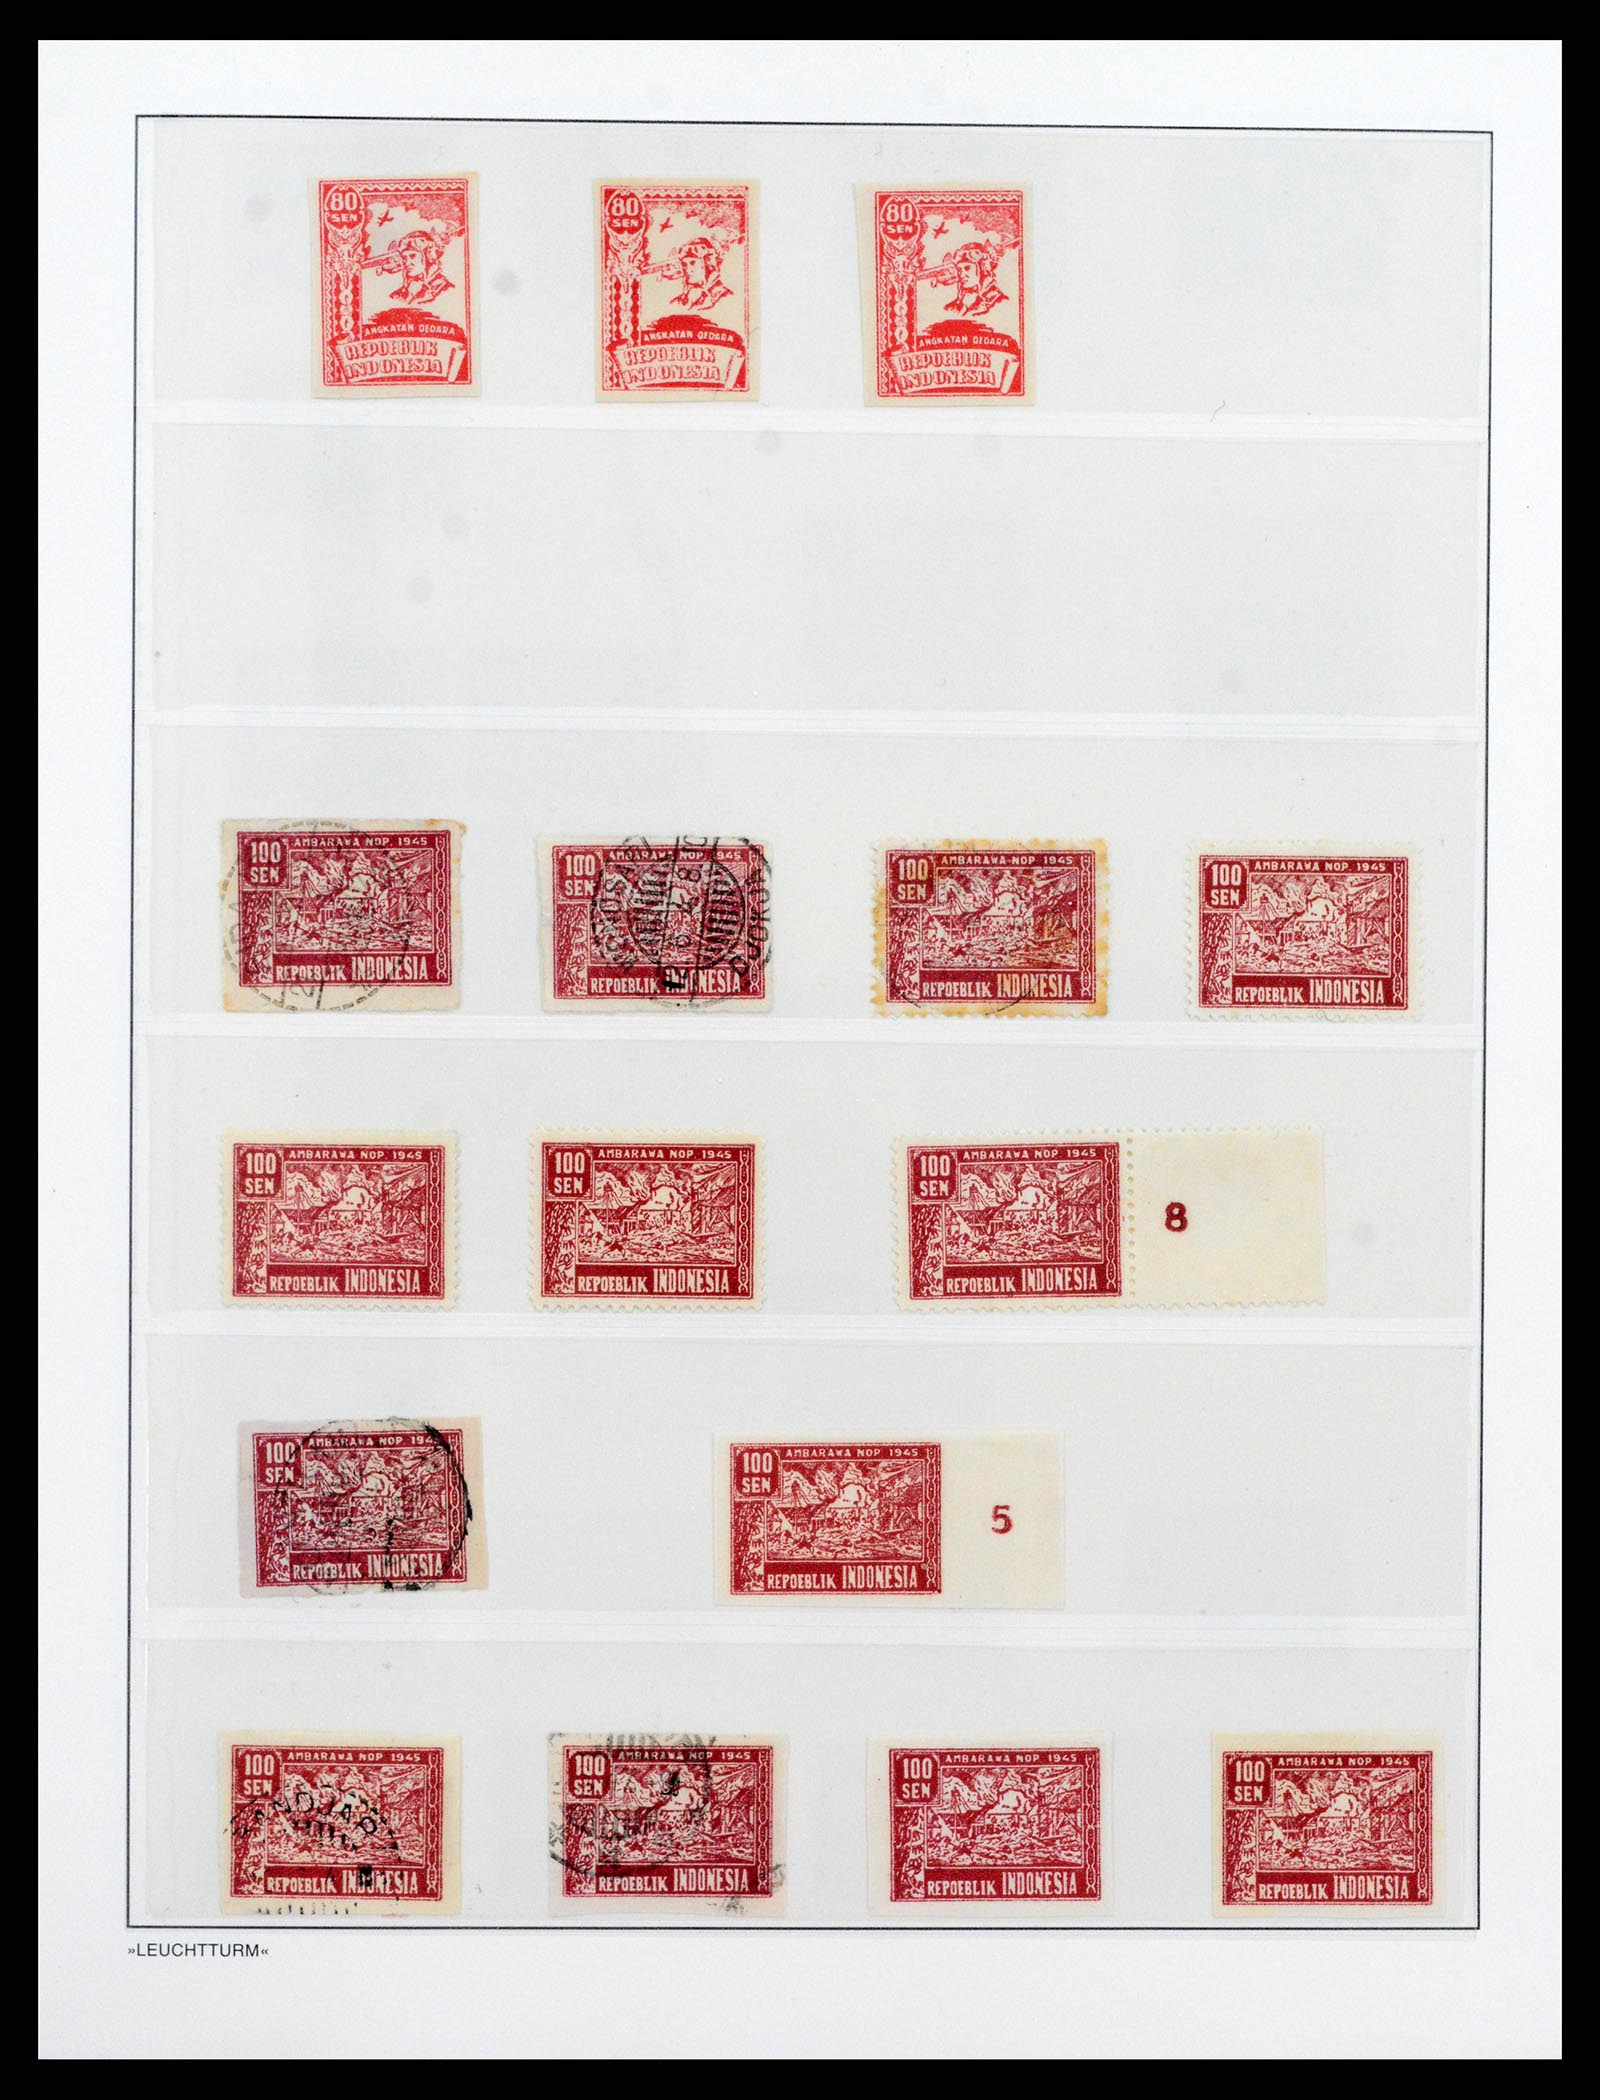 37435 025 - Stamp collection 37435 Indonesia interim period 1945-1948.